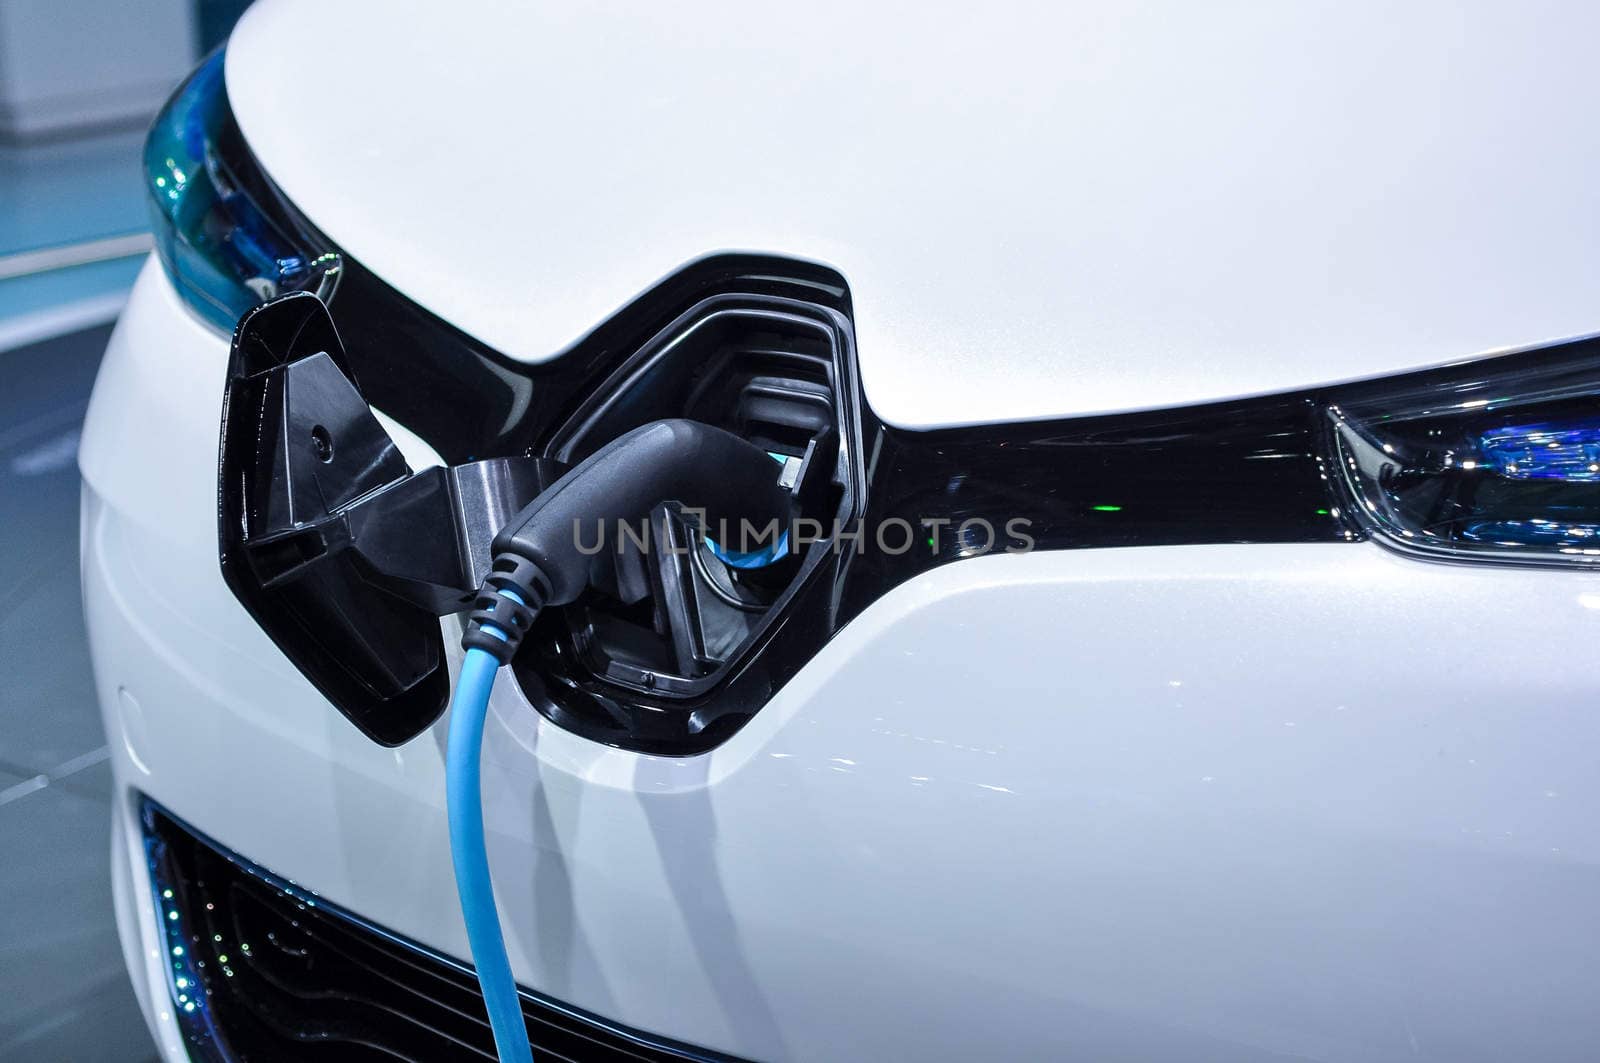 electric vehicle charging by vlaru